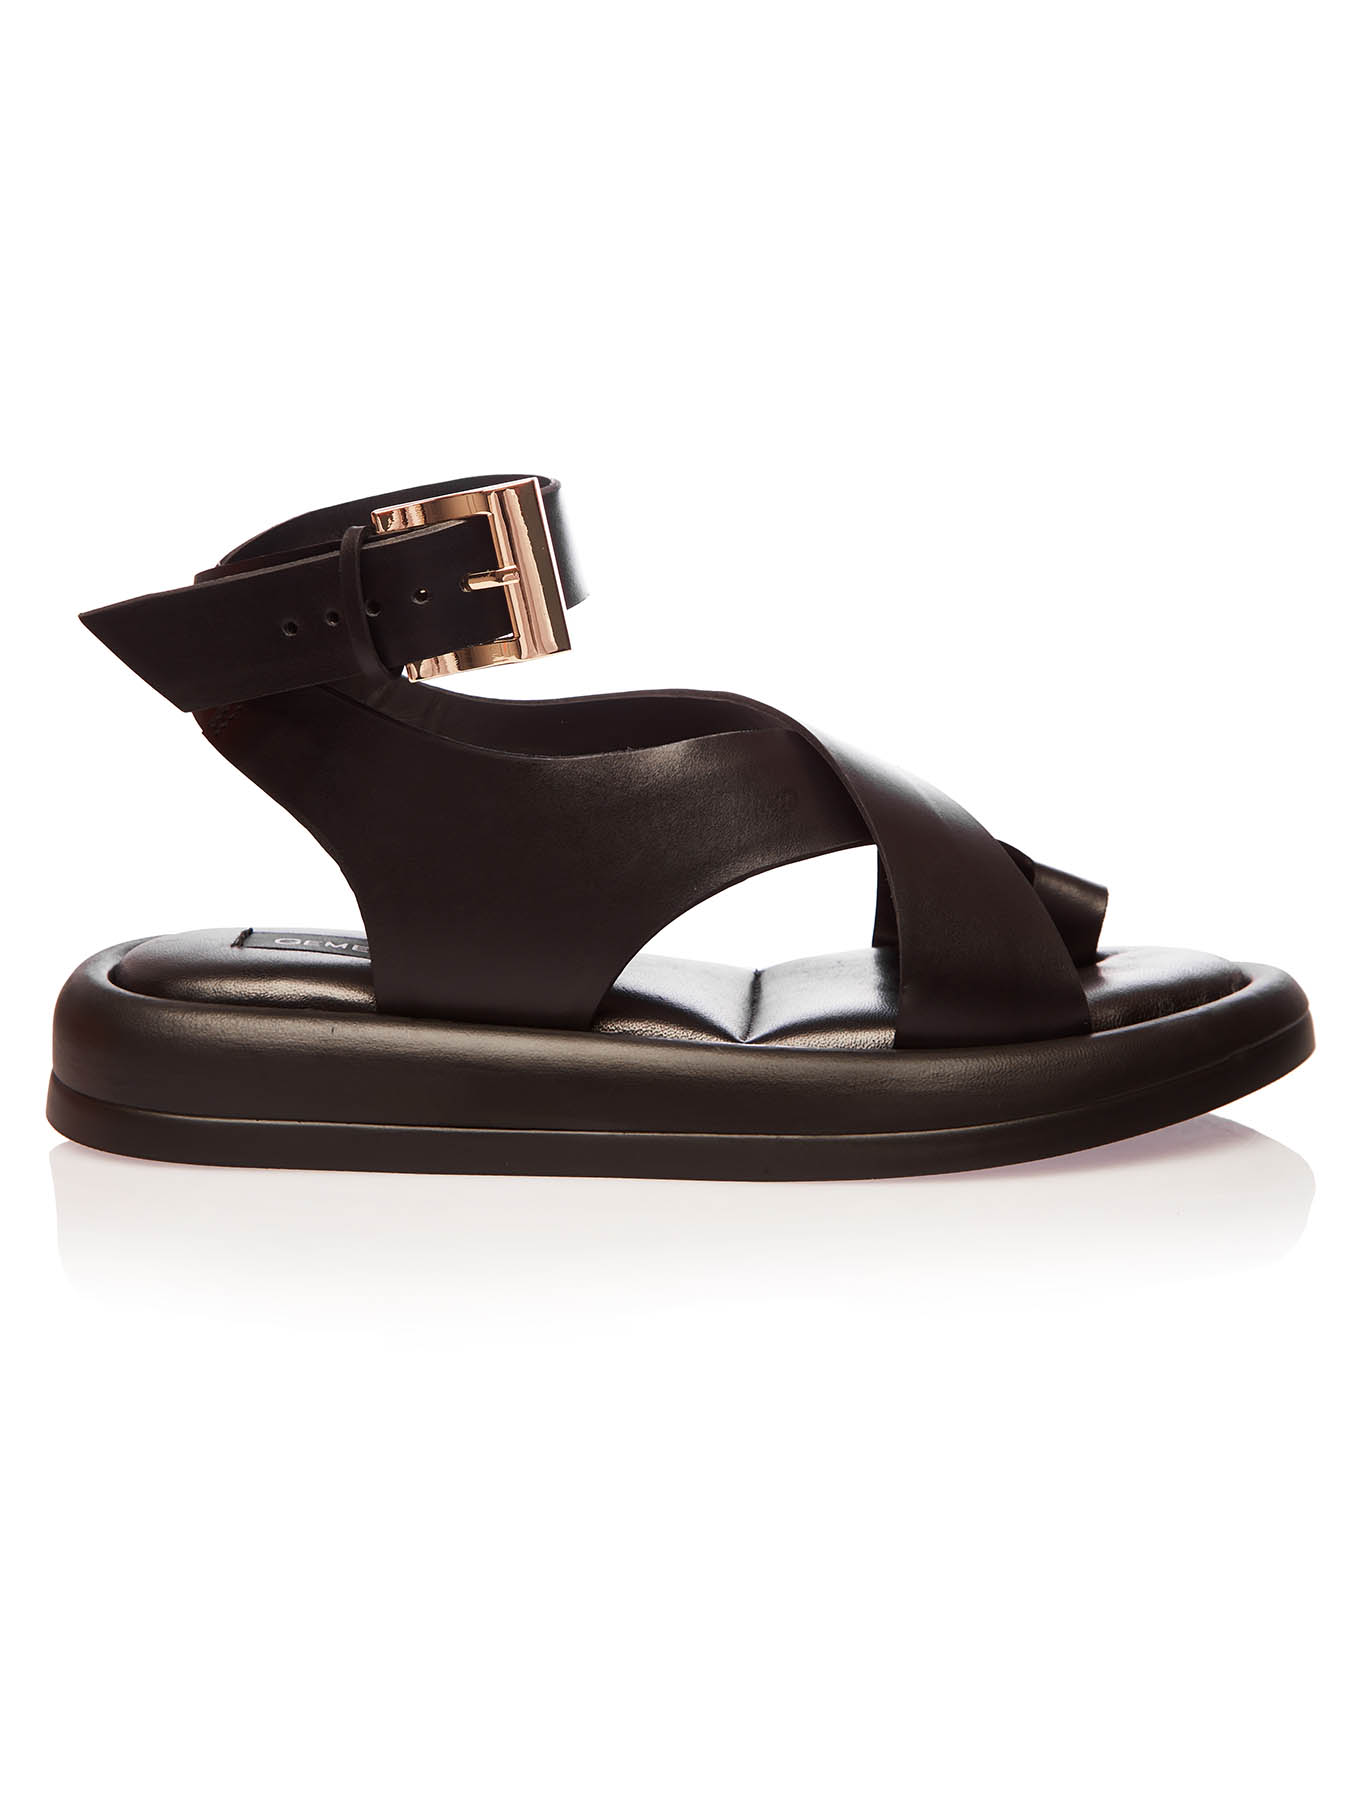 Sandale Joase Negre Piele Naturala Moale Gemelli Shoes Comanda Online Pantofi la comanda lucrati manual din piele naturala